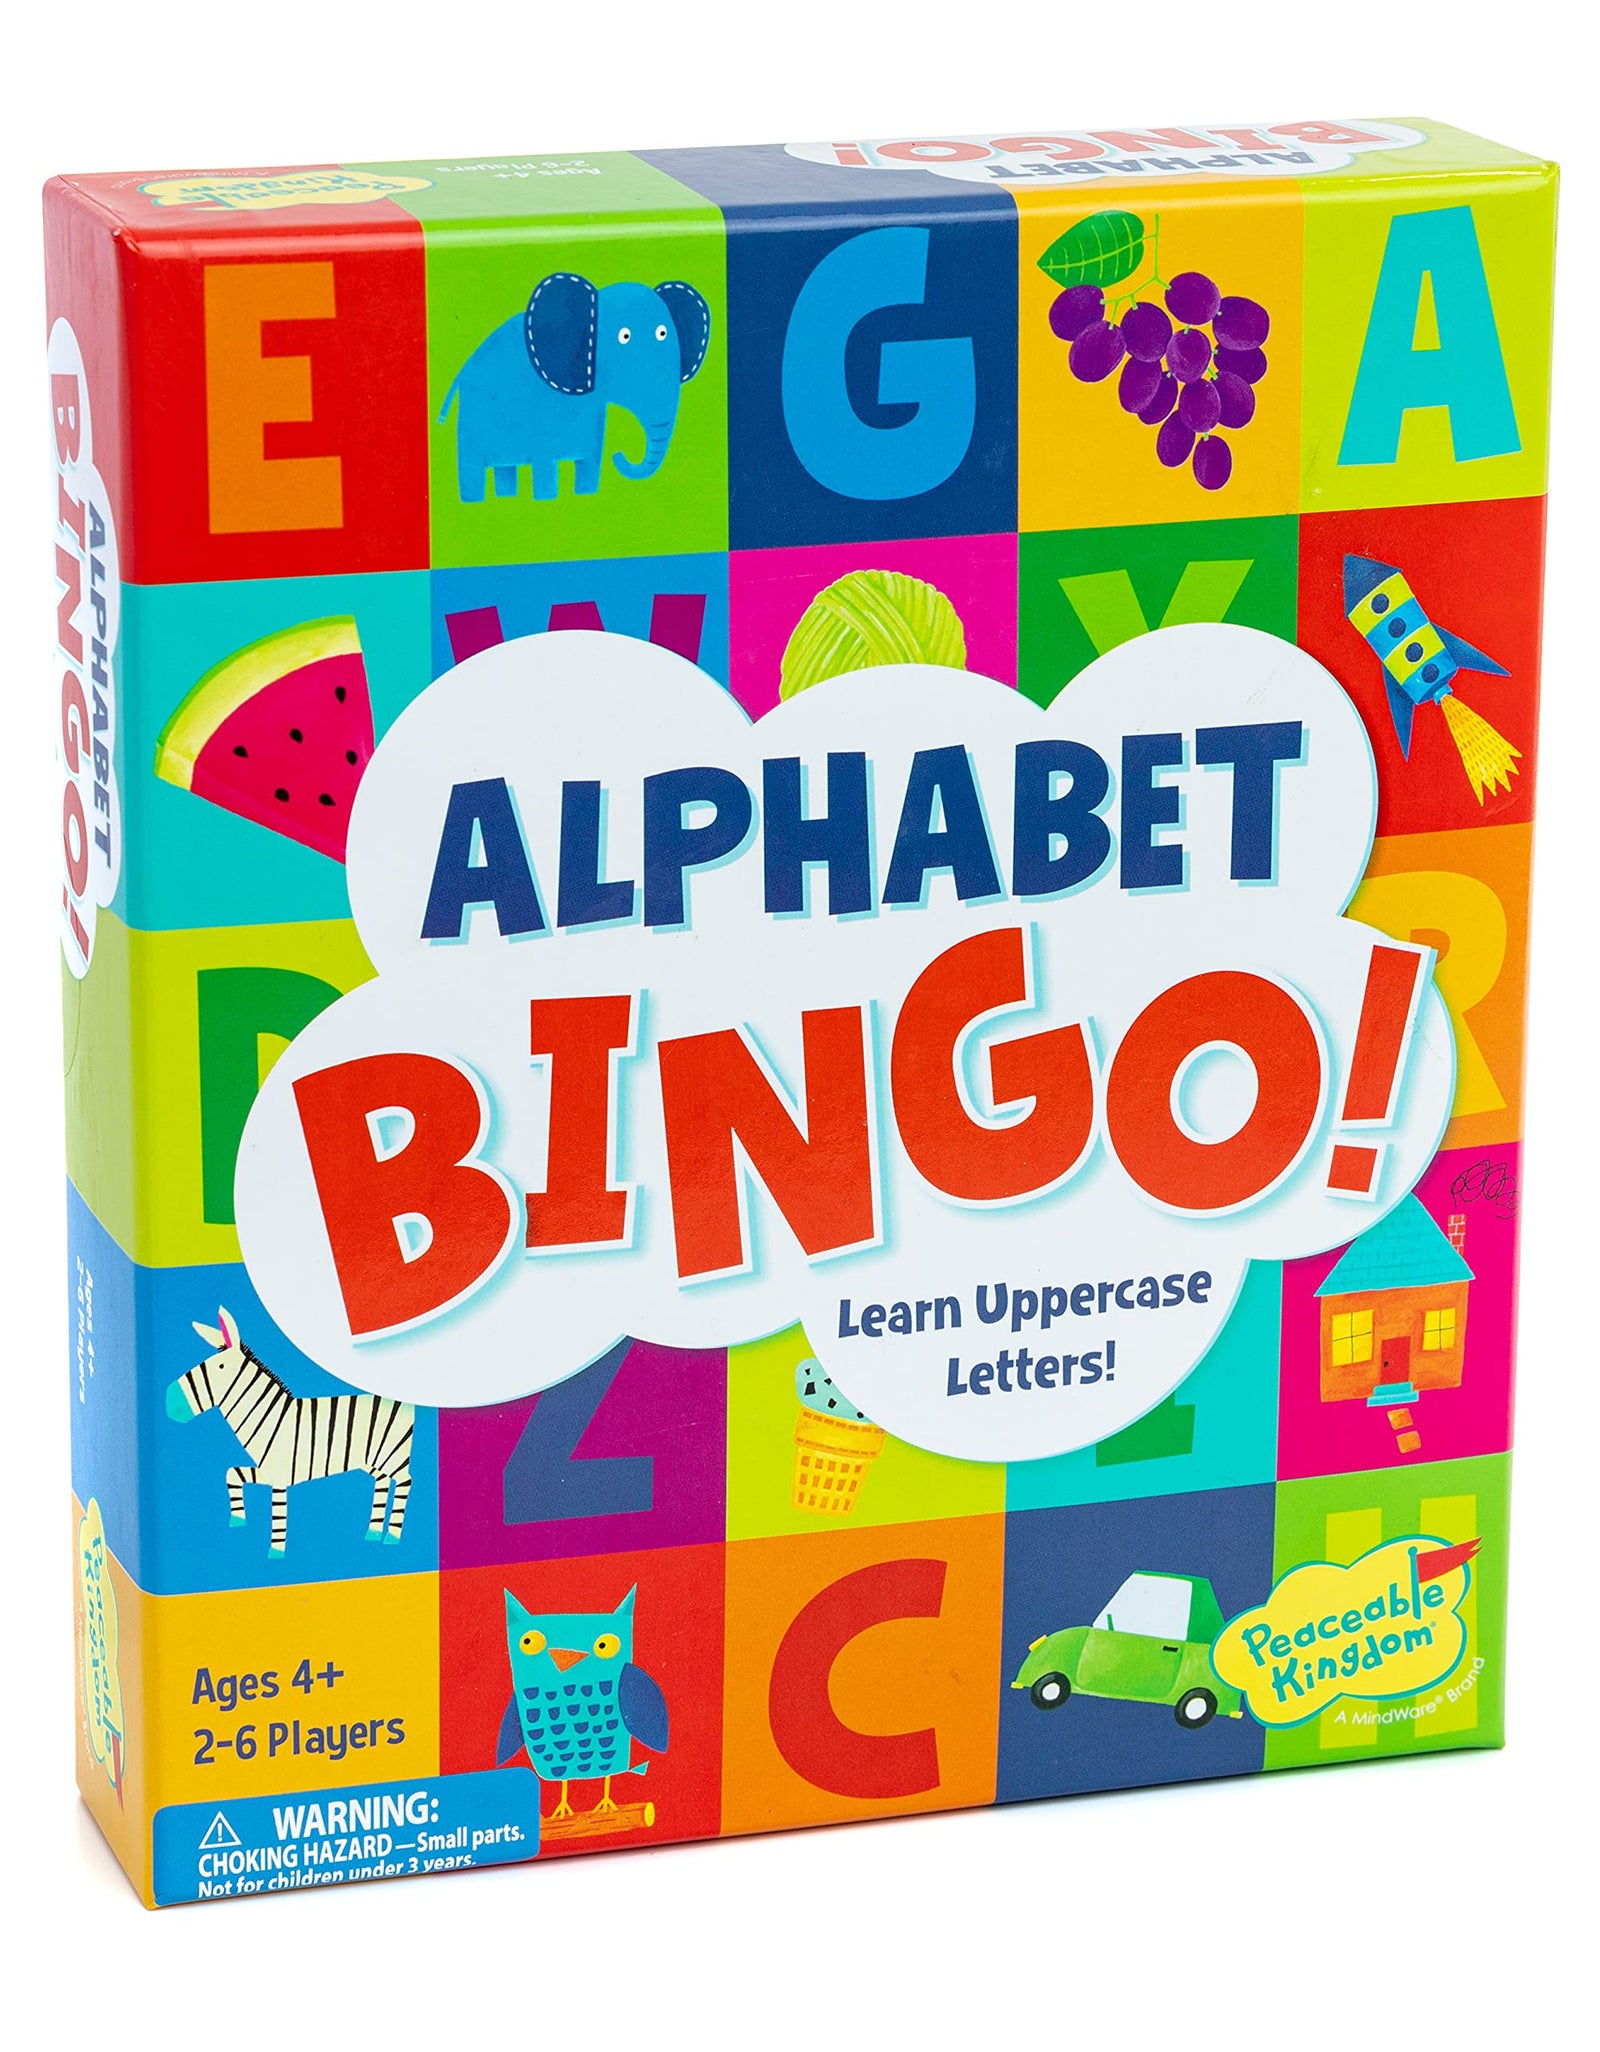 Peaceable Kingdom Alphabet Bingo! Letter Learning Board Game for Kids